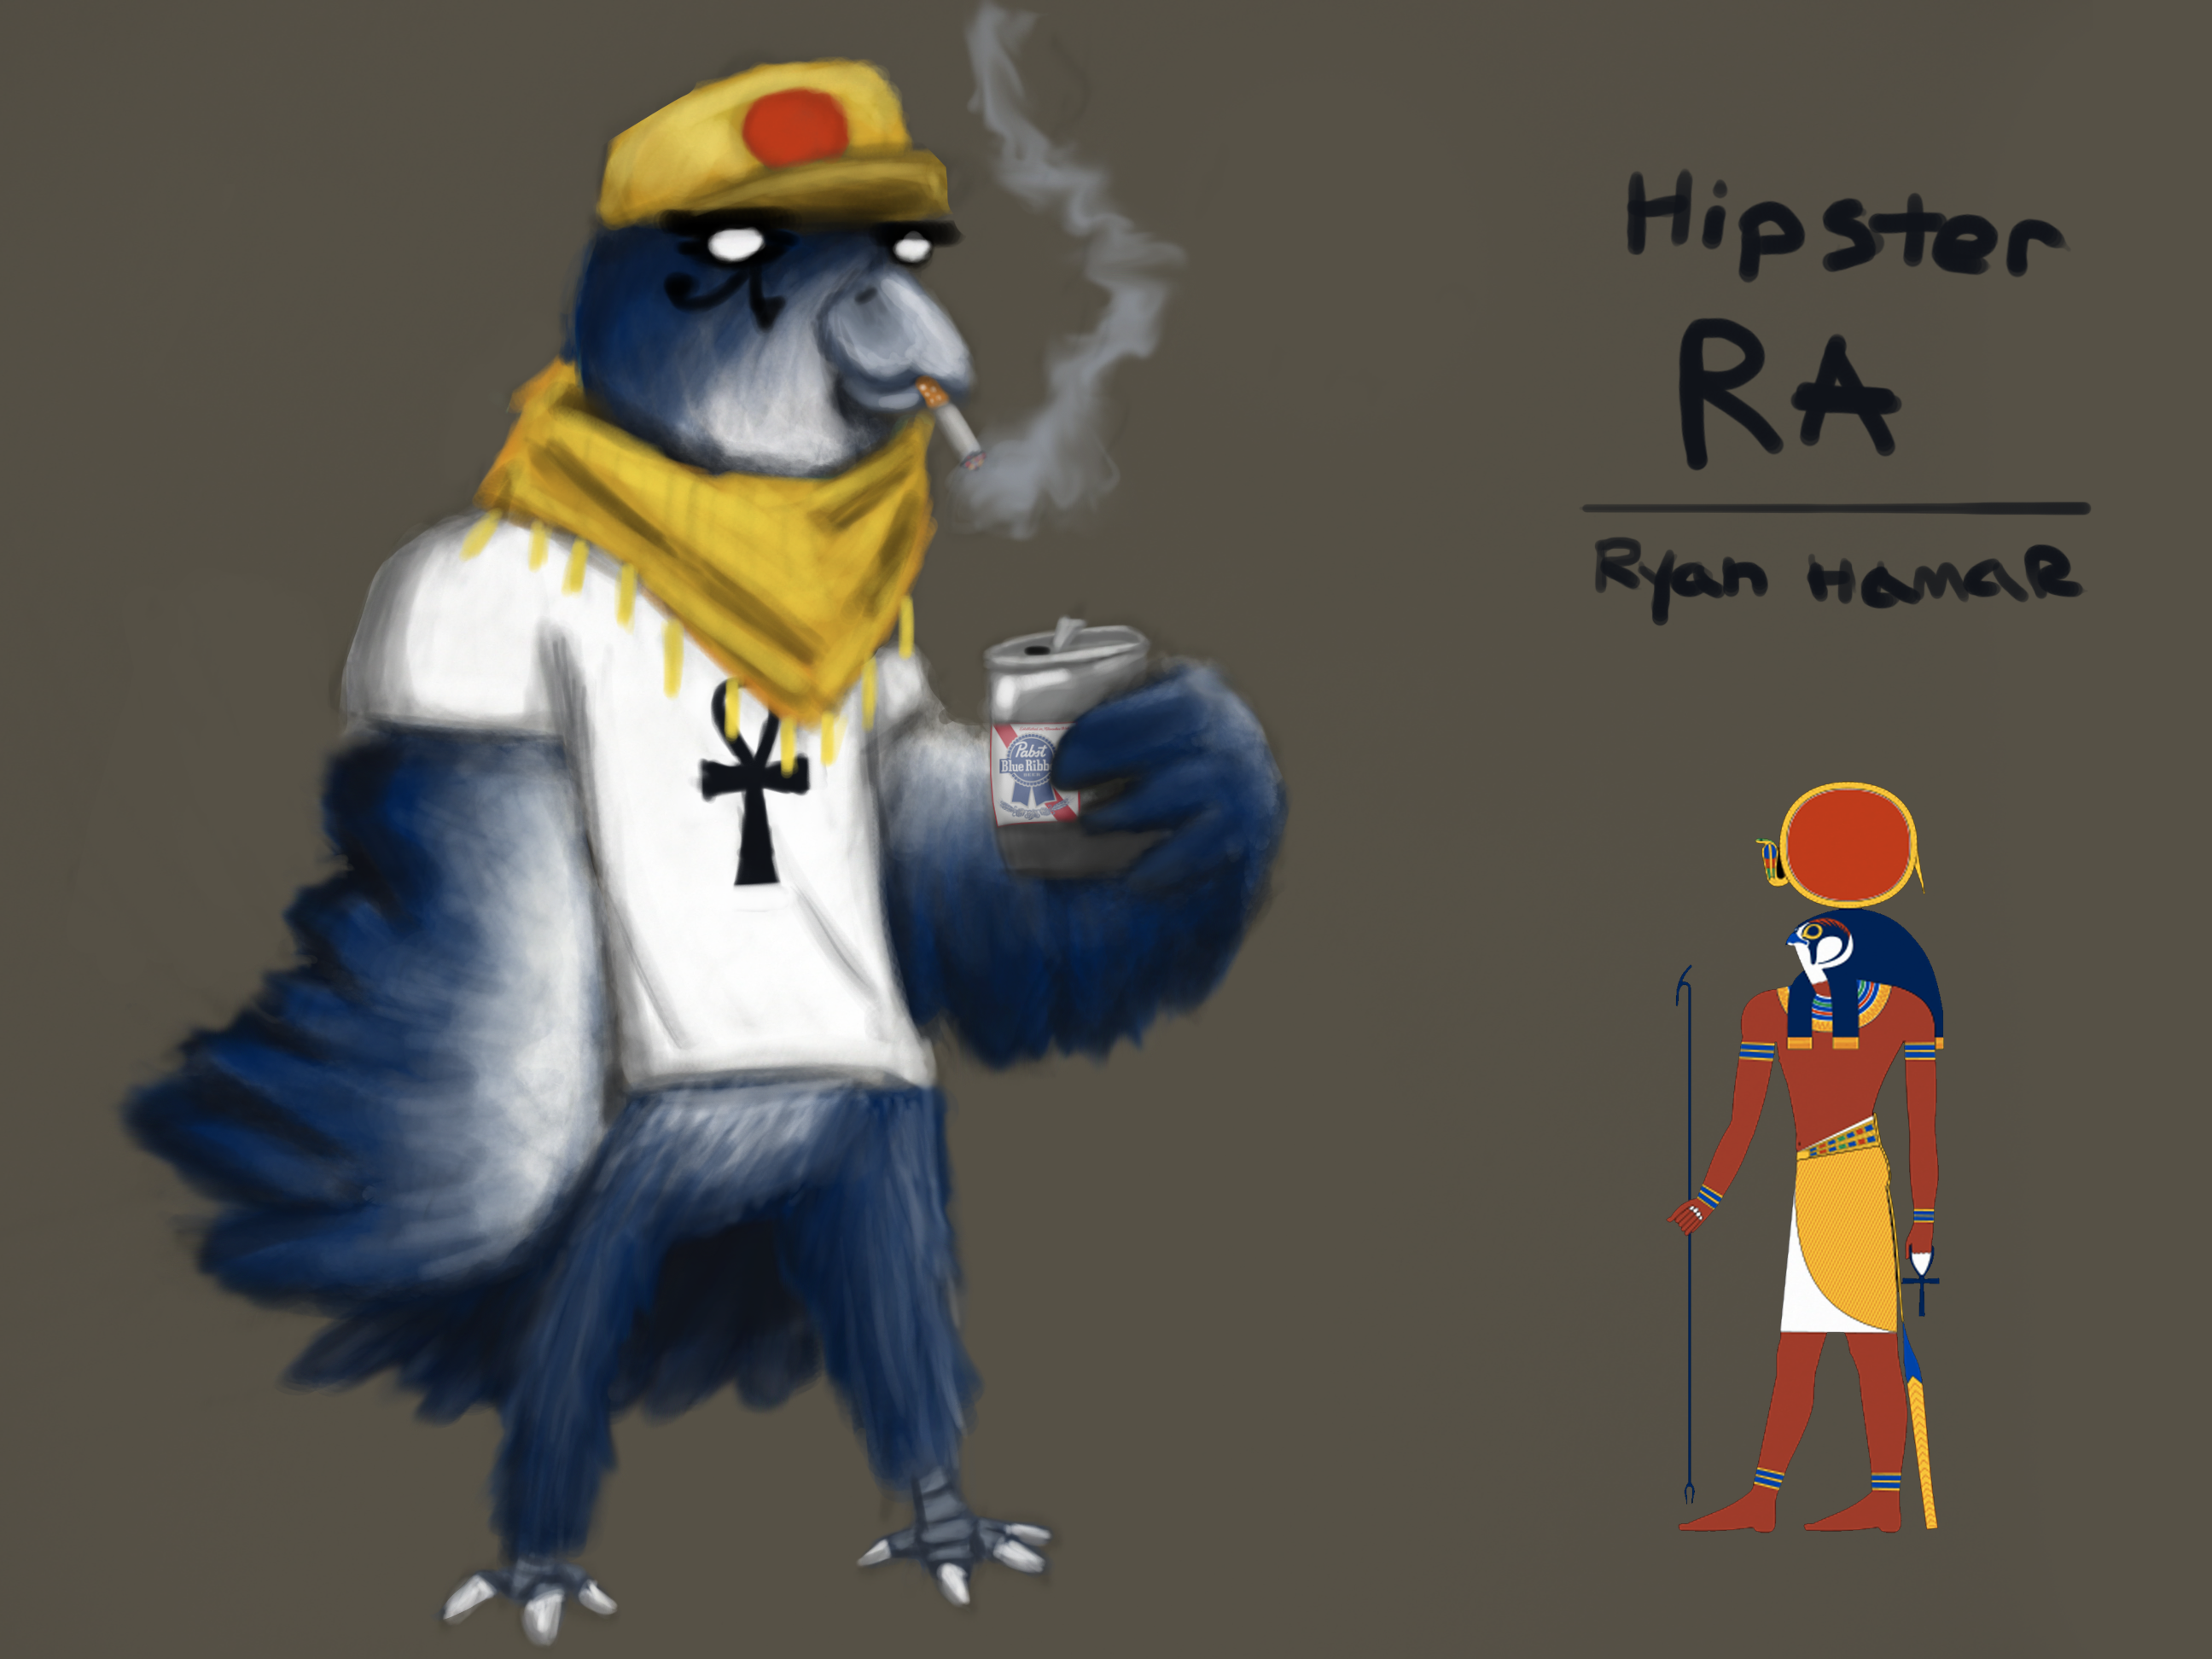 Hipster Ra